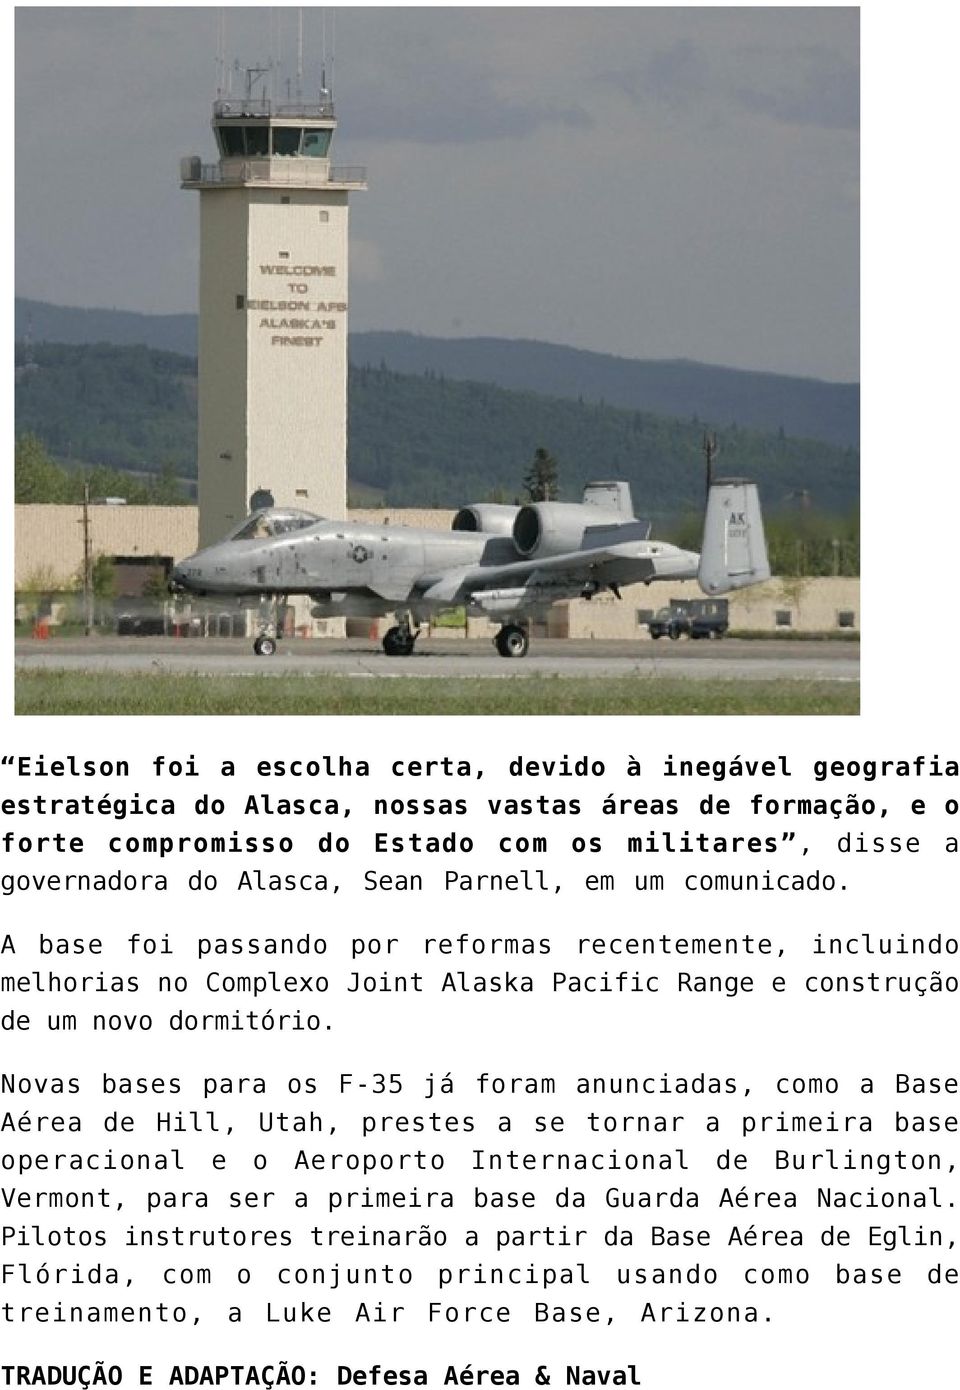 Novas bases para os F-35 já foram anunciadas, como a Base Aérea de Hill, Utah, prestes a se tornar a primeira base operacional e o Aeroporto Internacional de Burlington, Vermont, para ser a primeira